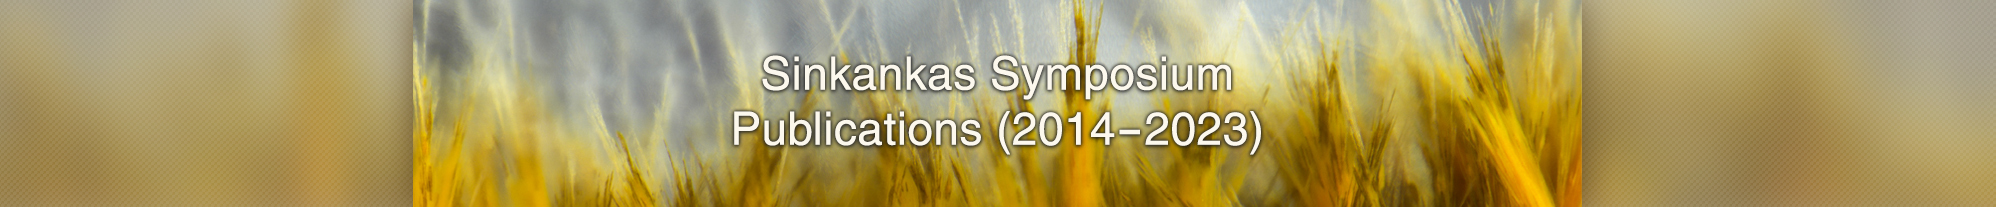 Sinkankas Symposium Publications (2014-2023)